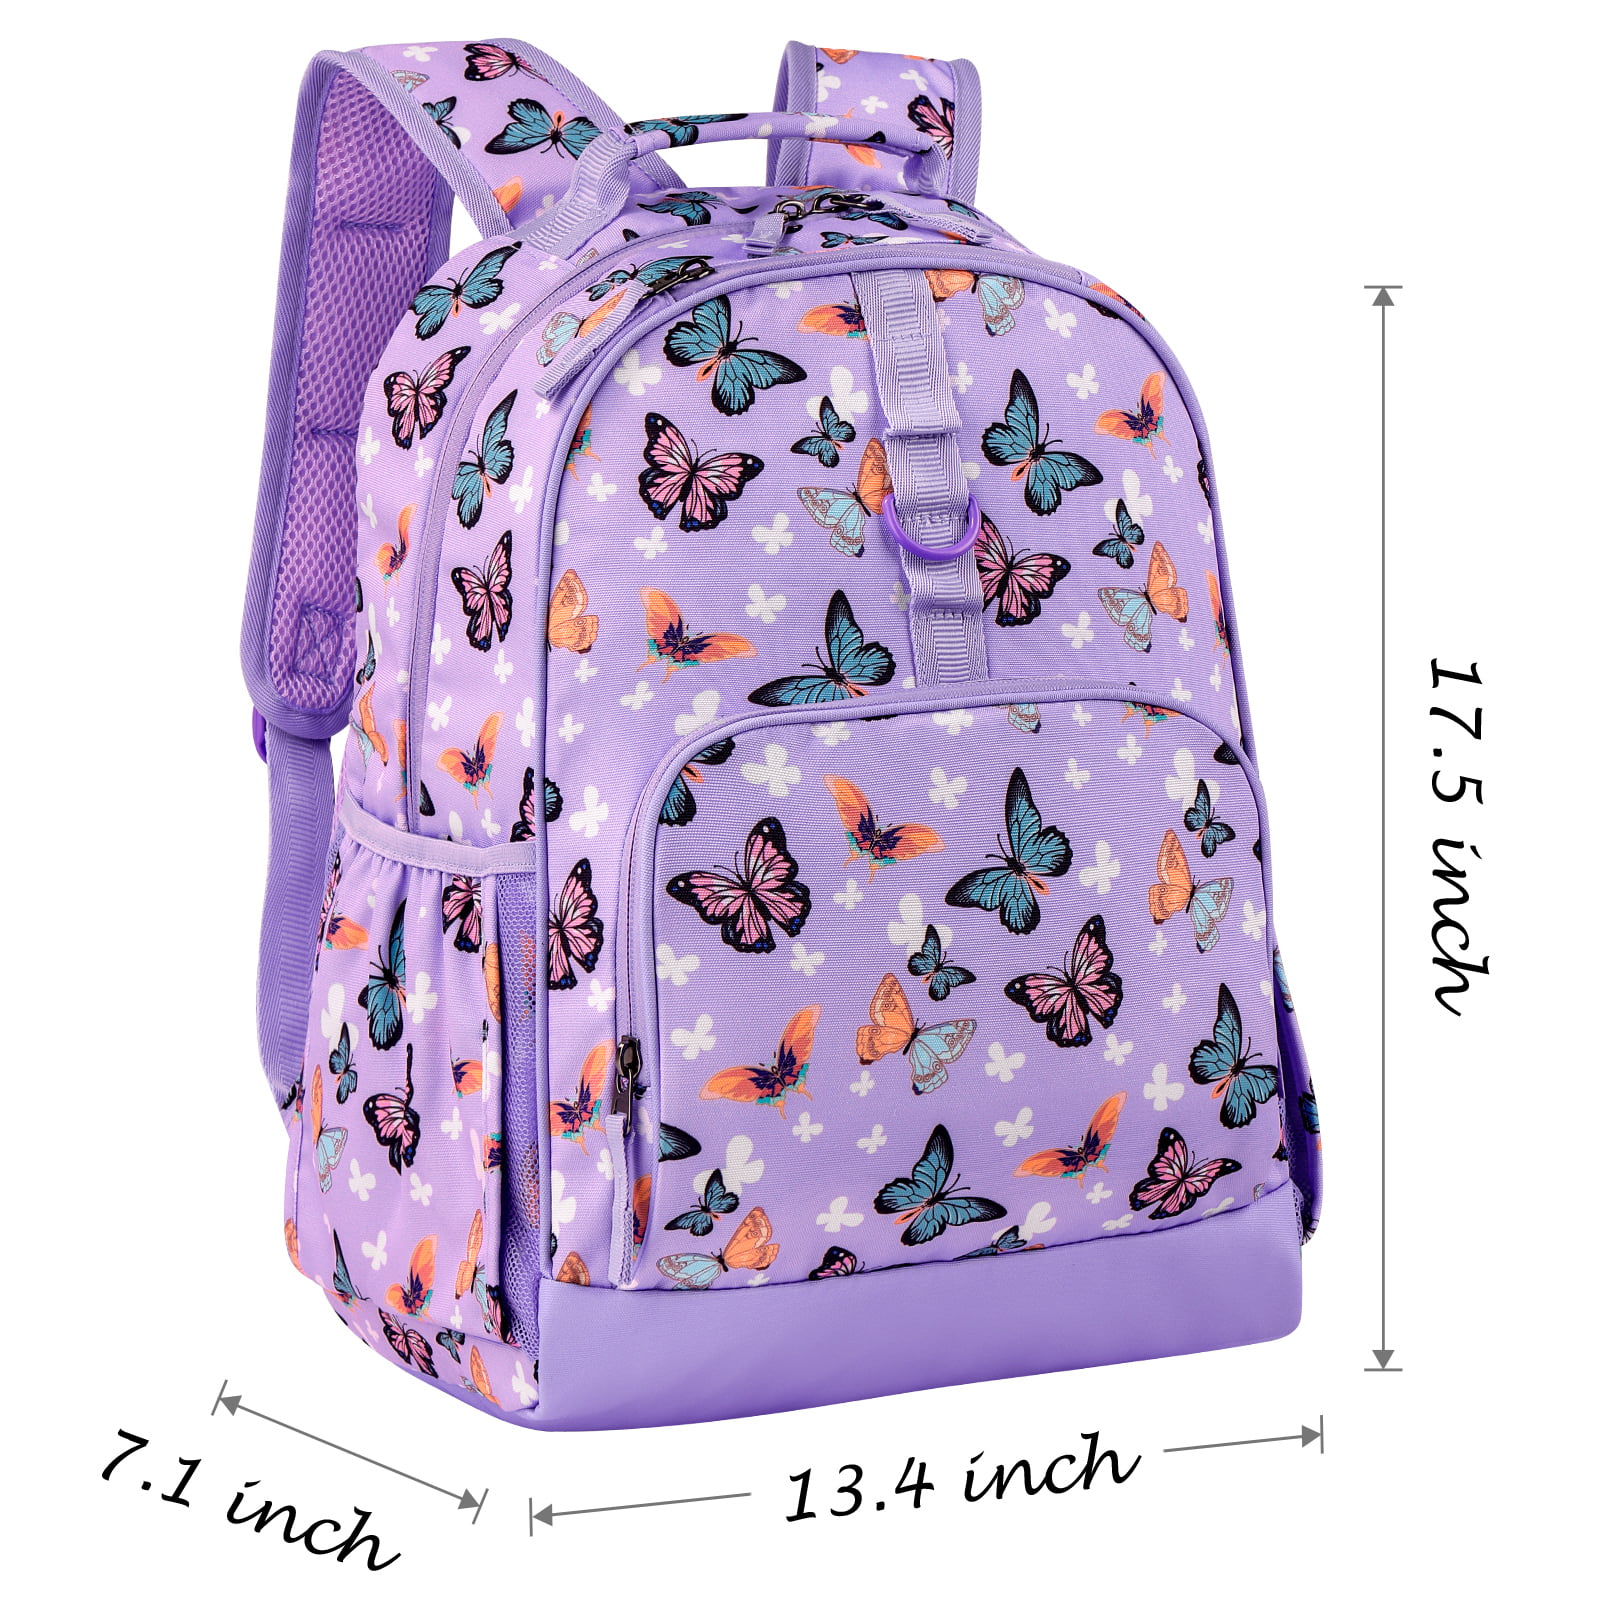 Choco Mocha Girls Lunch Box for School, Purple Unicorn Planet Lunch Bag for  Kids